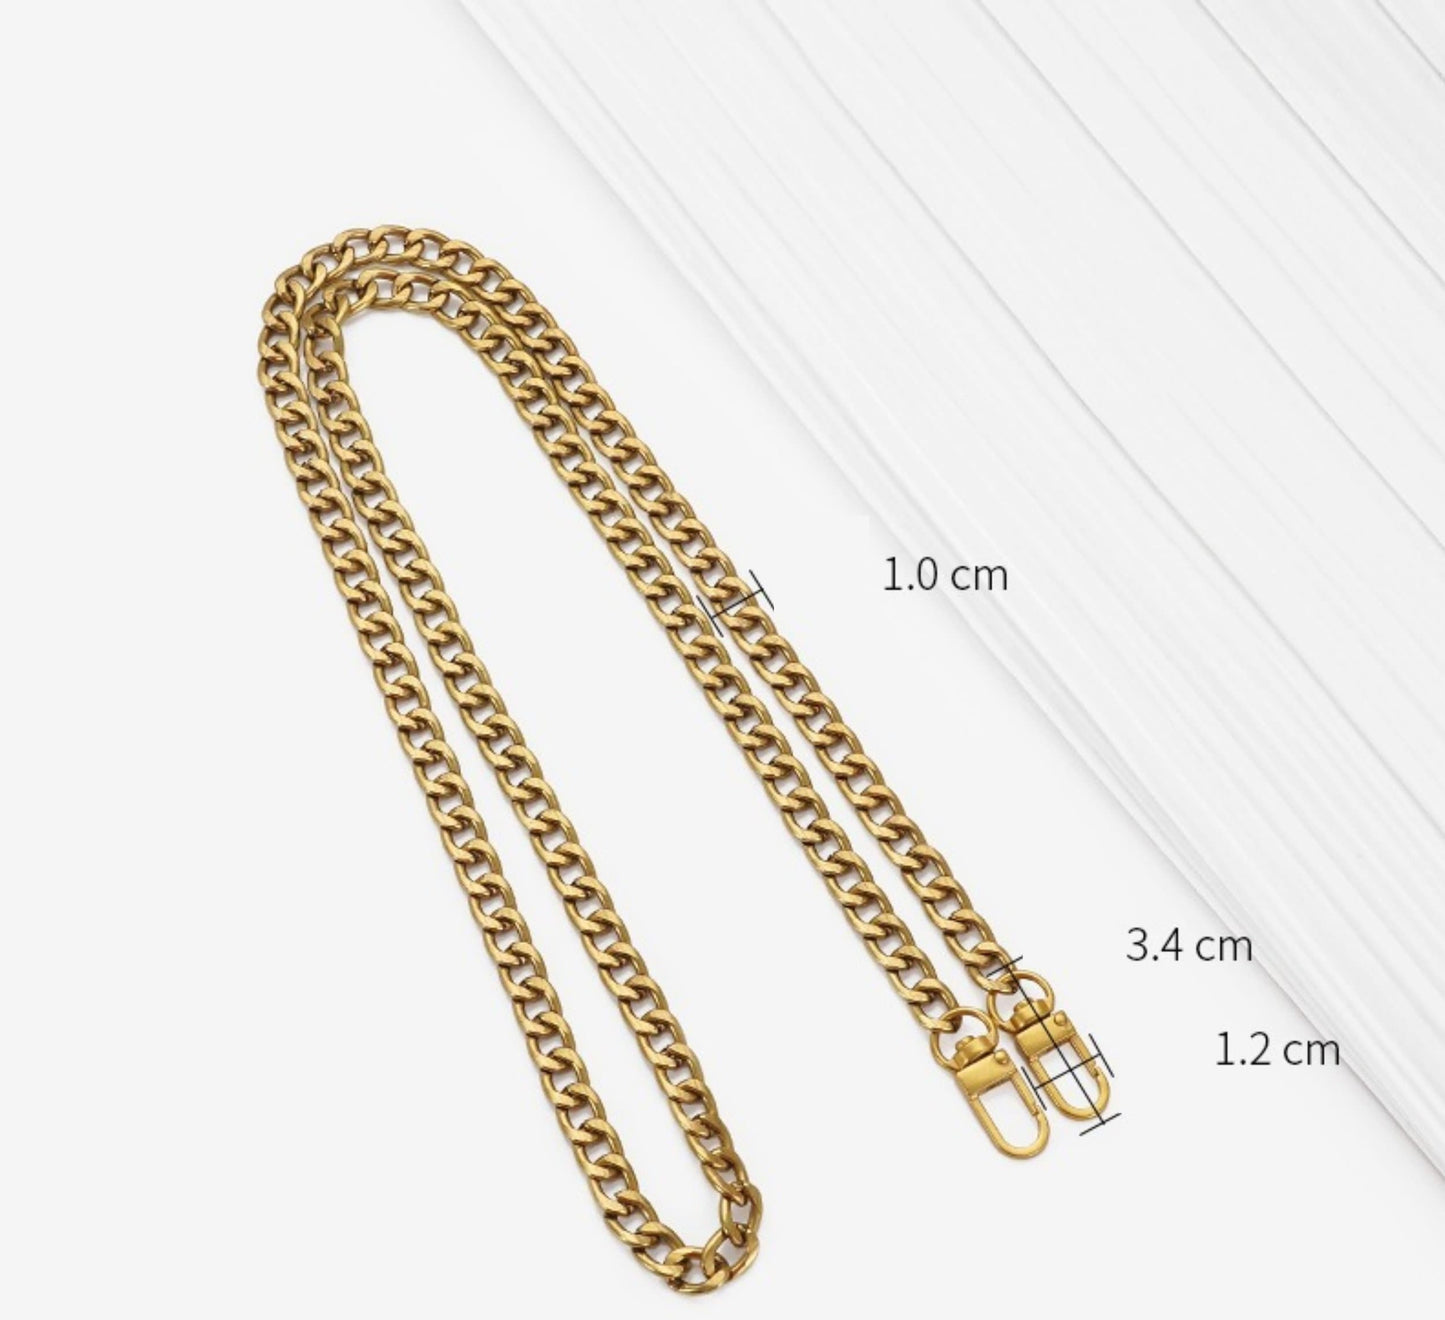 60/90/100/110/120cm Metal Chain Replacement Strap | Marmont Strap Chain | Metal Bag Strap | Bag Chain